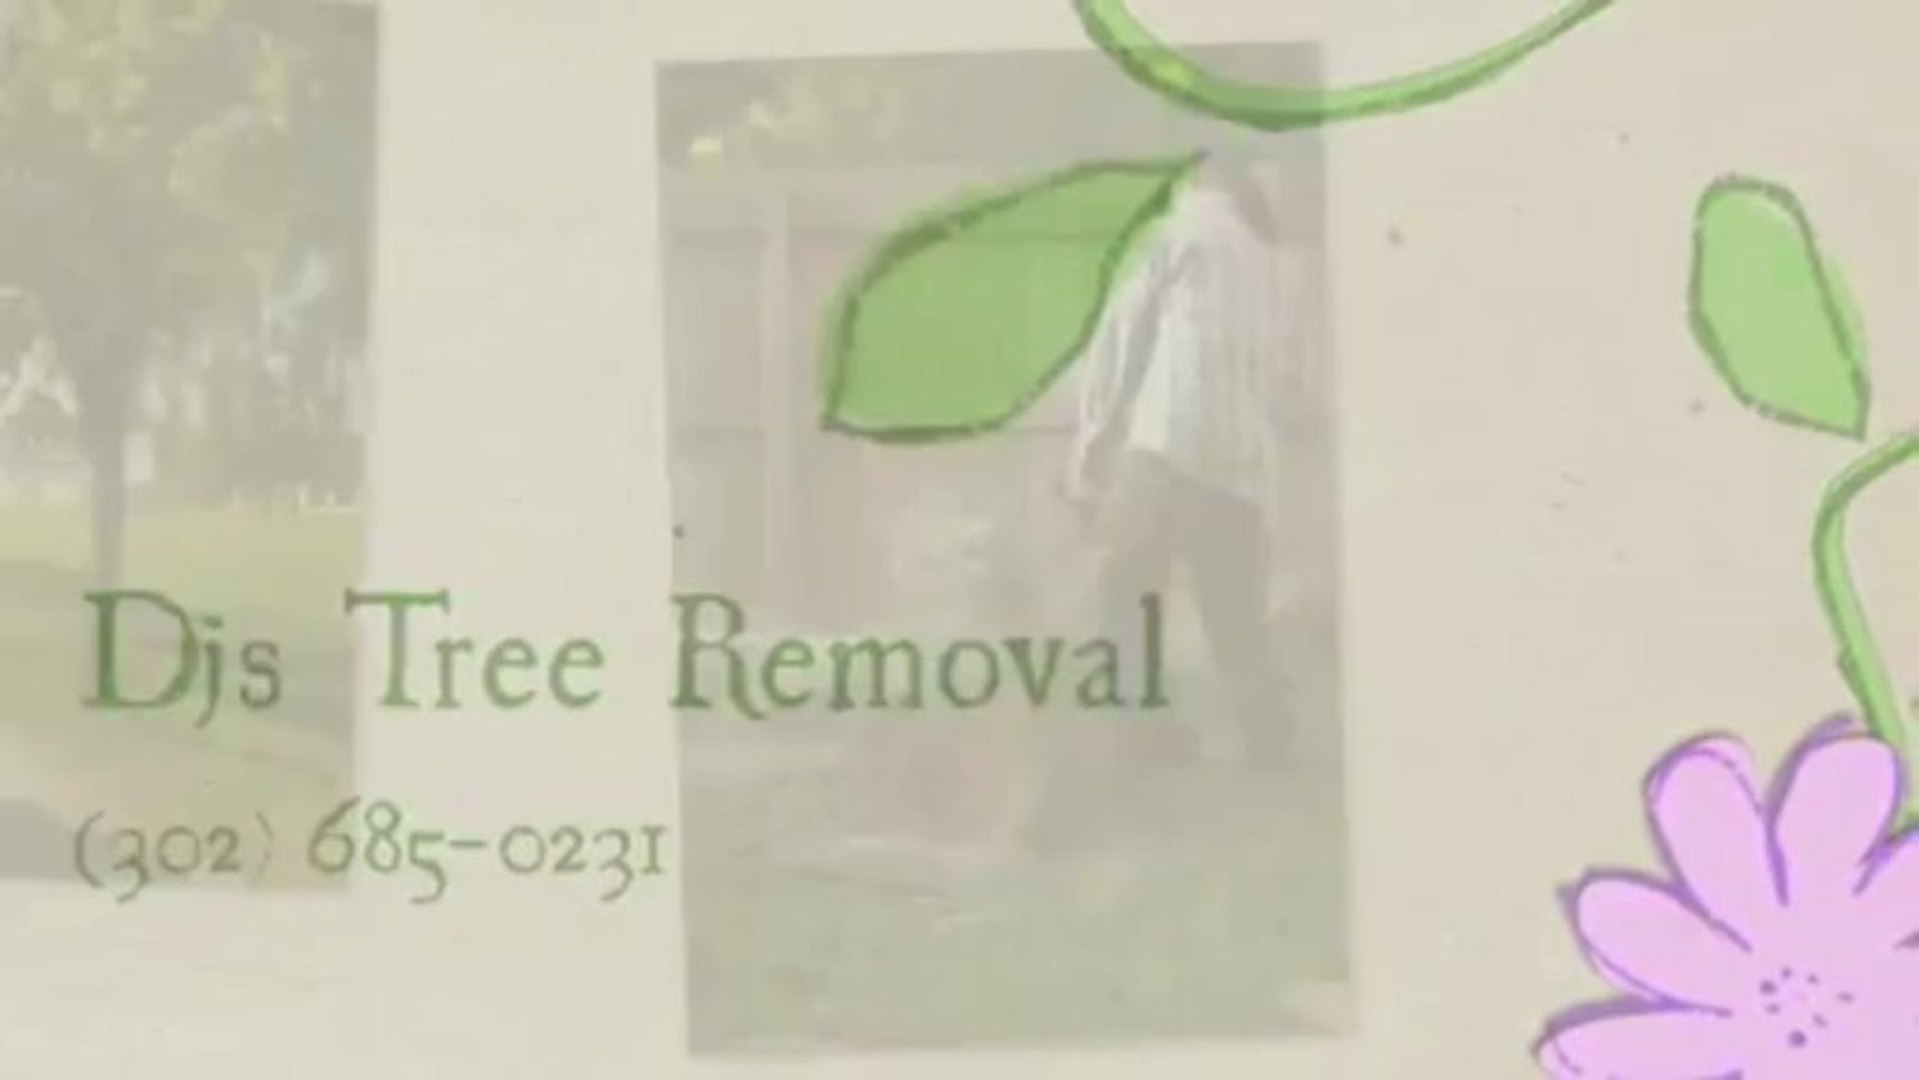 ⁣Djs Tree Removal - (302) 685-0231